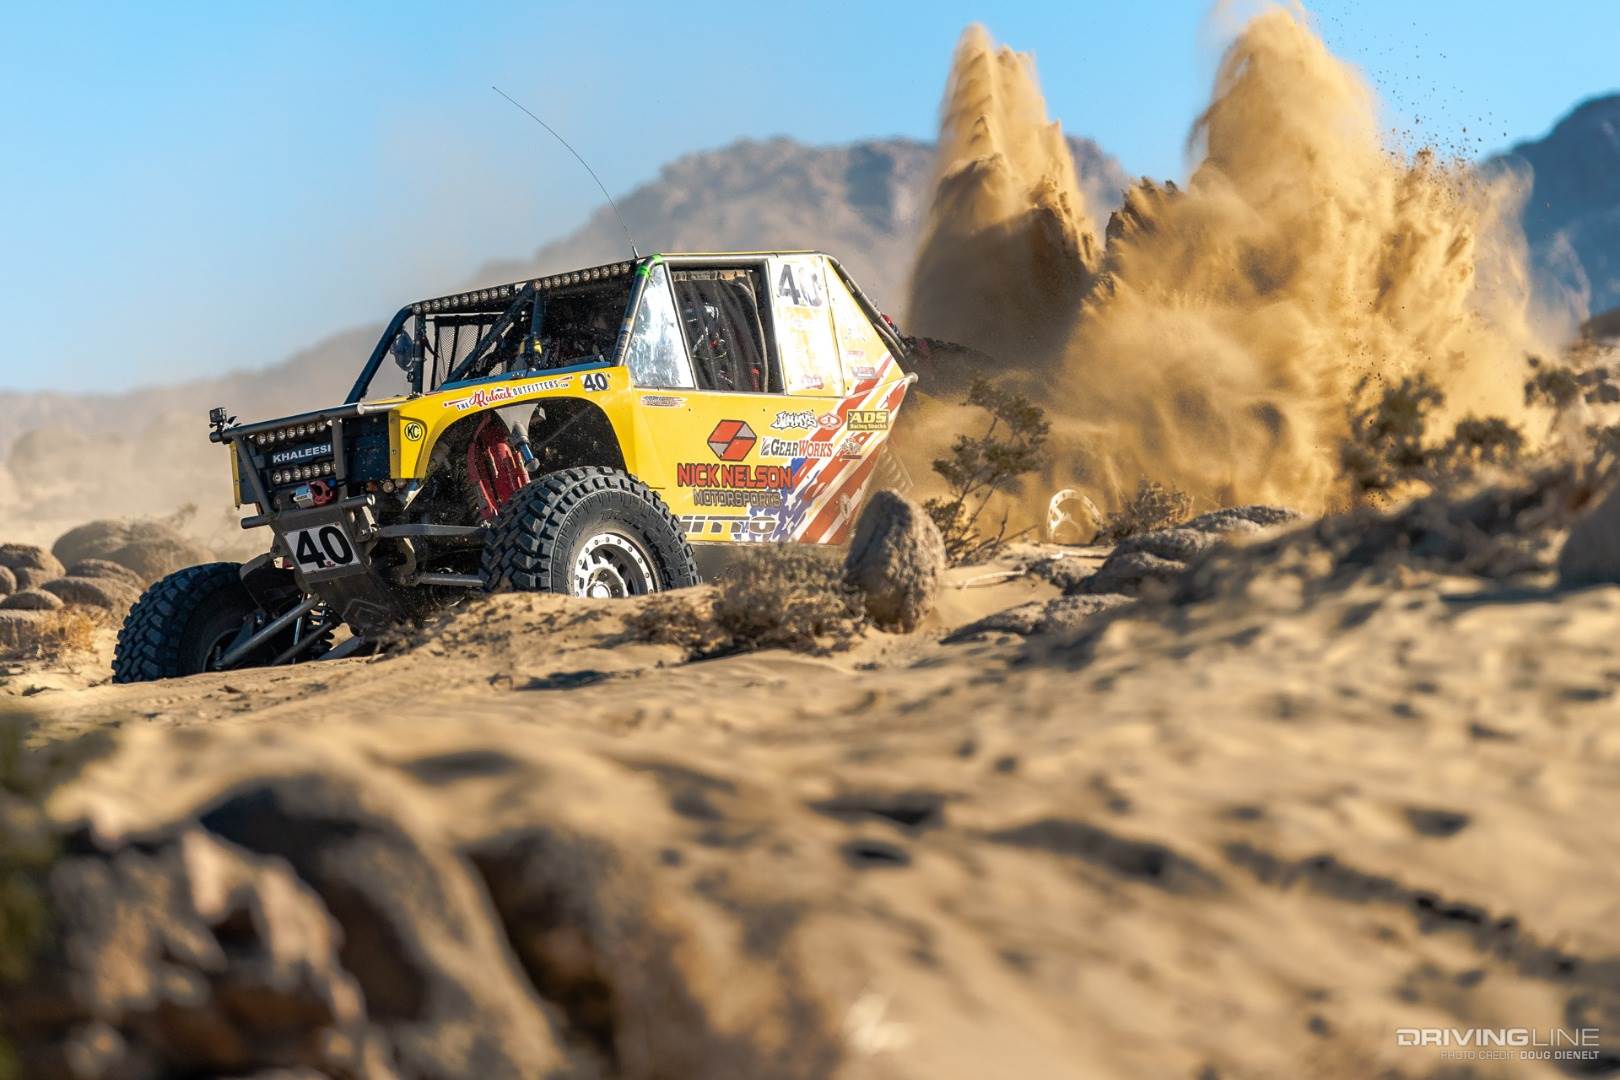 Nick Nelson's rig kicking up dirt in the desert